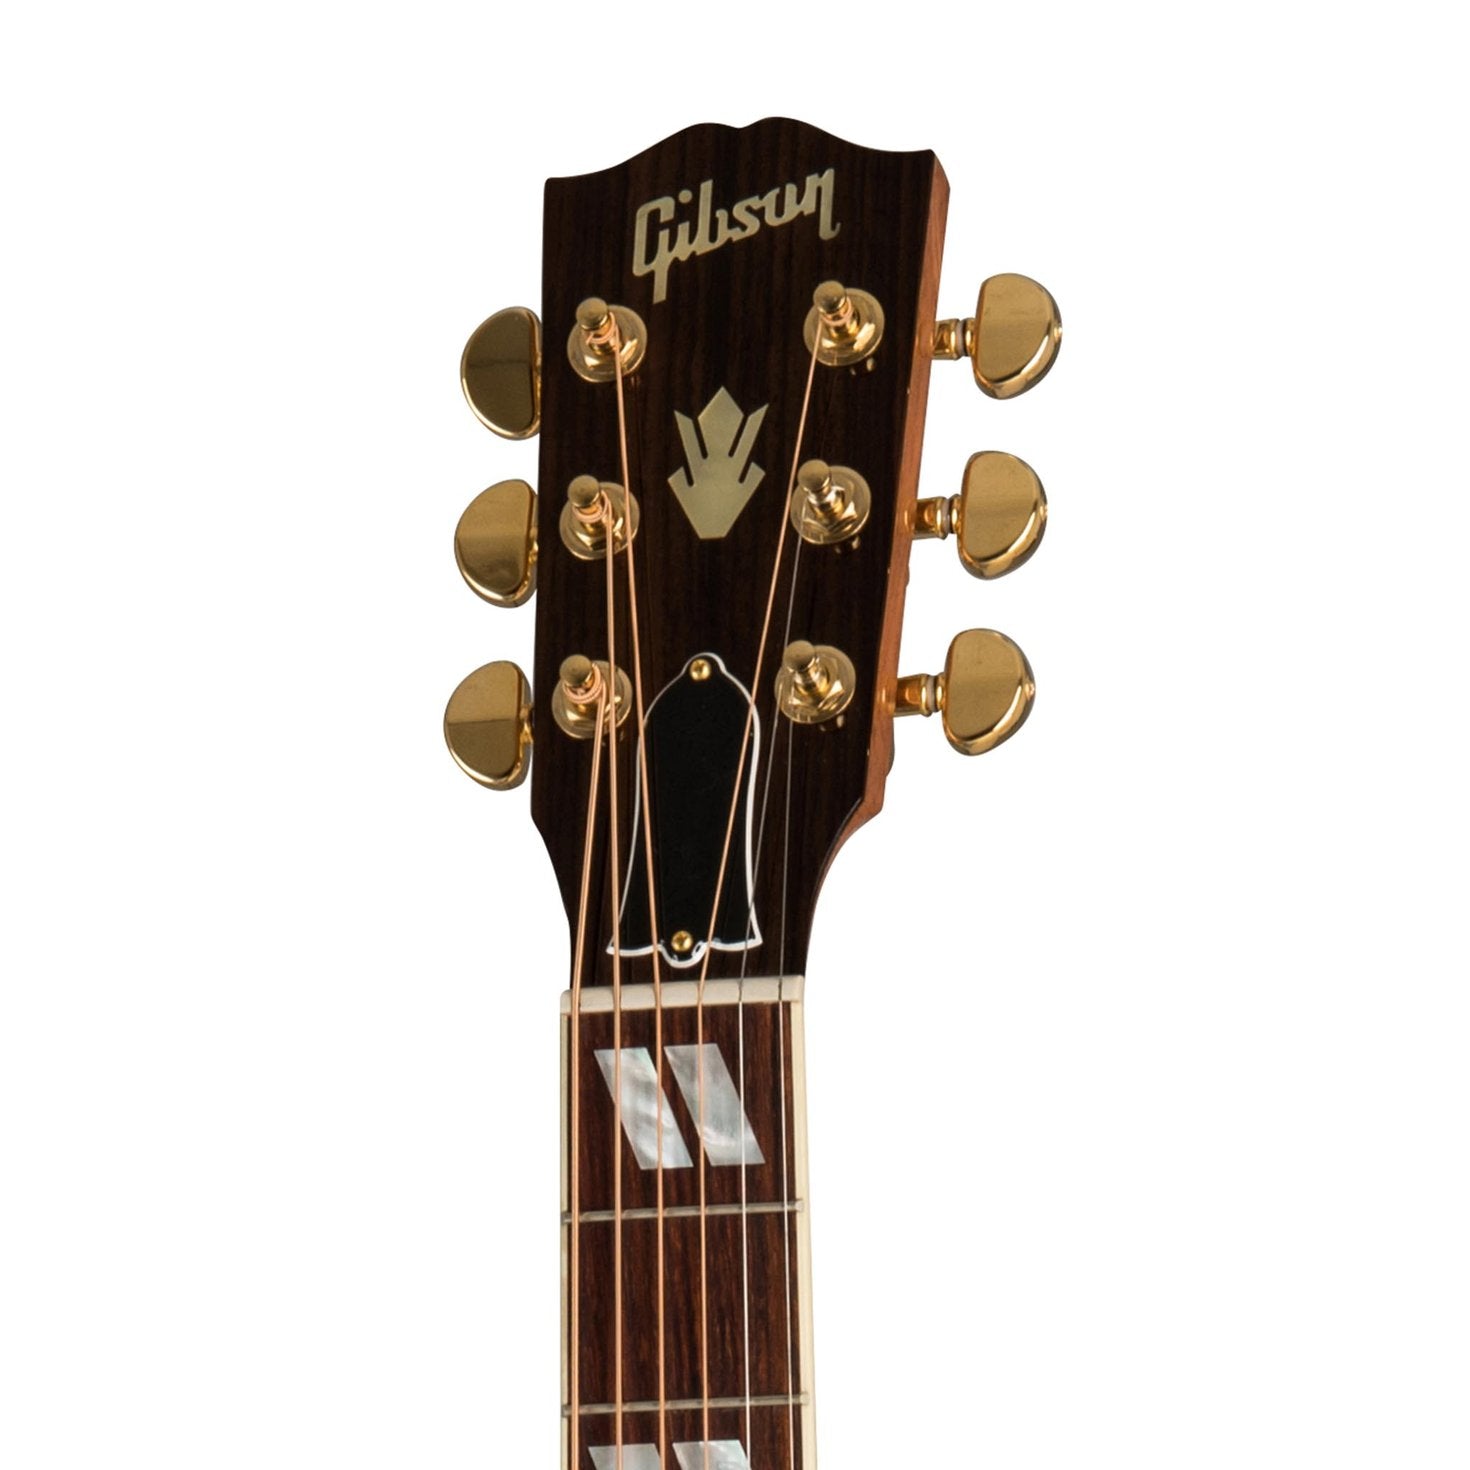 Gibson Montana 2019 Songwriter Cutaway Acoustic Guitar, RW Burst, GIBSON, ACOUSTIC GUITAR, gibson-acoustic-guitar-g06-ssscrbg19, ZOSO MUSIC SDN BHD